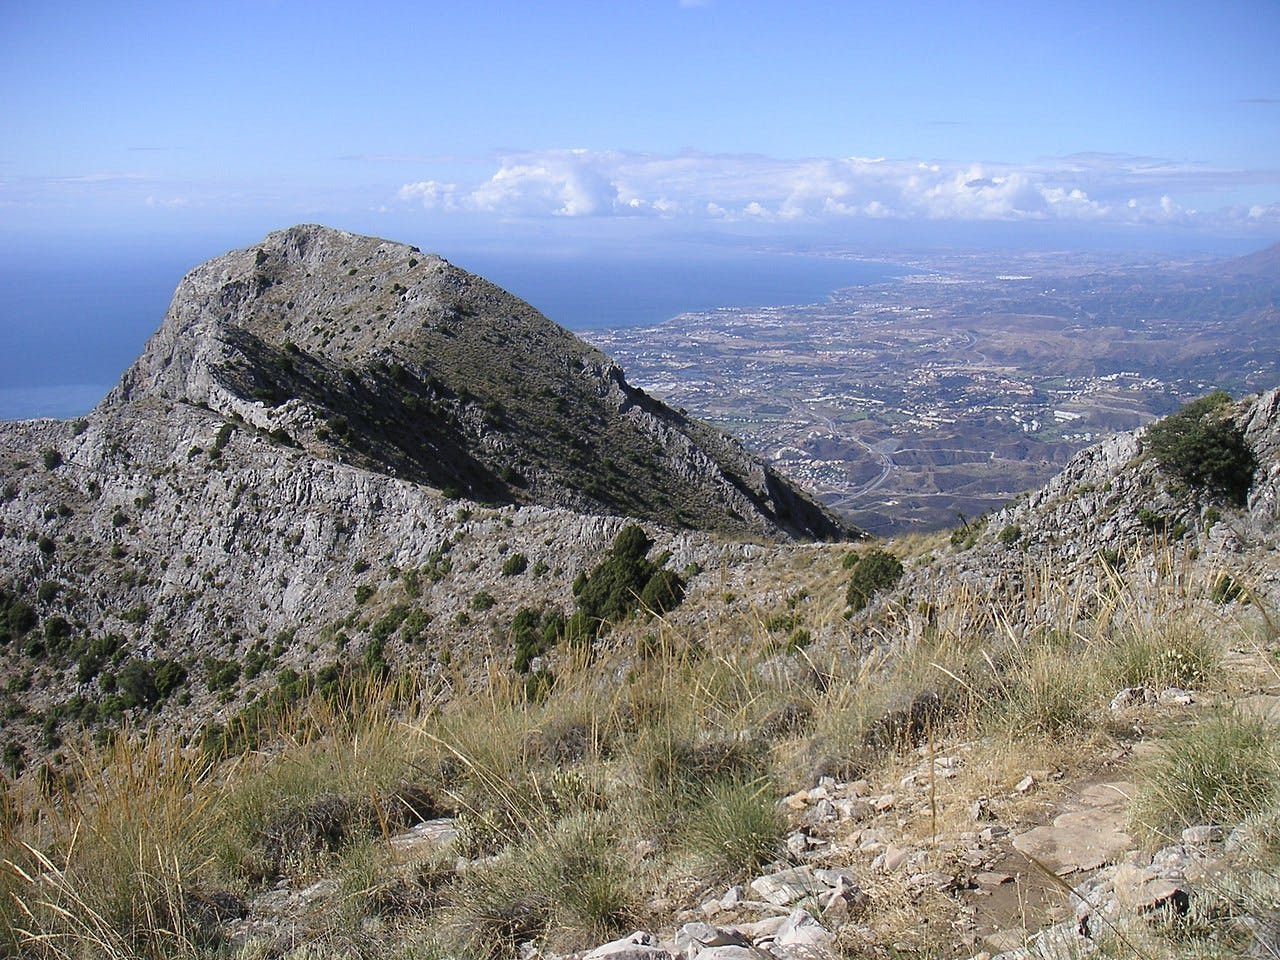 "La Concha" Mountain